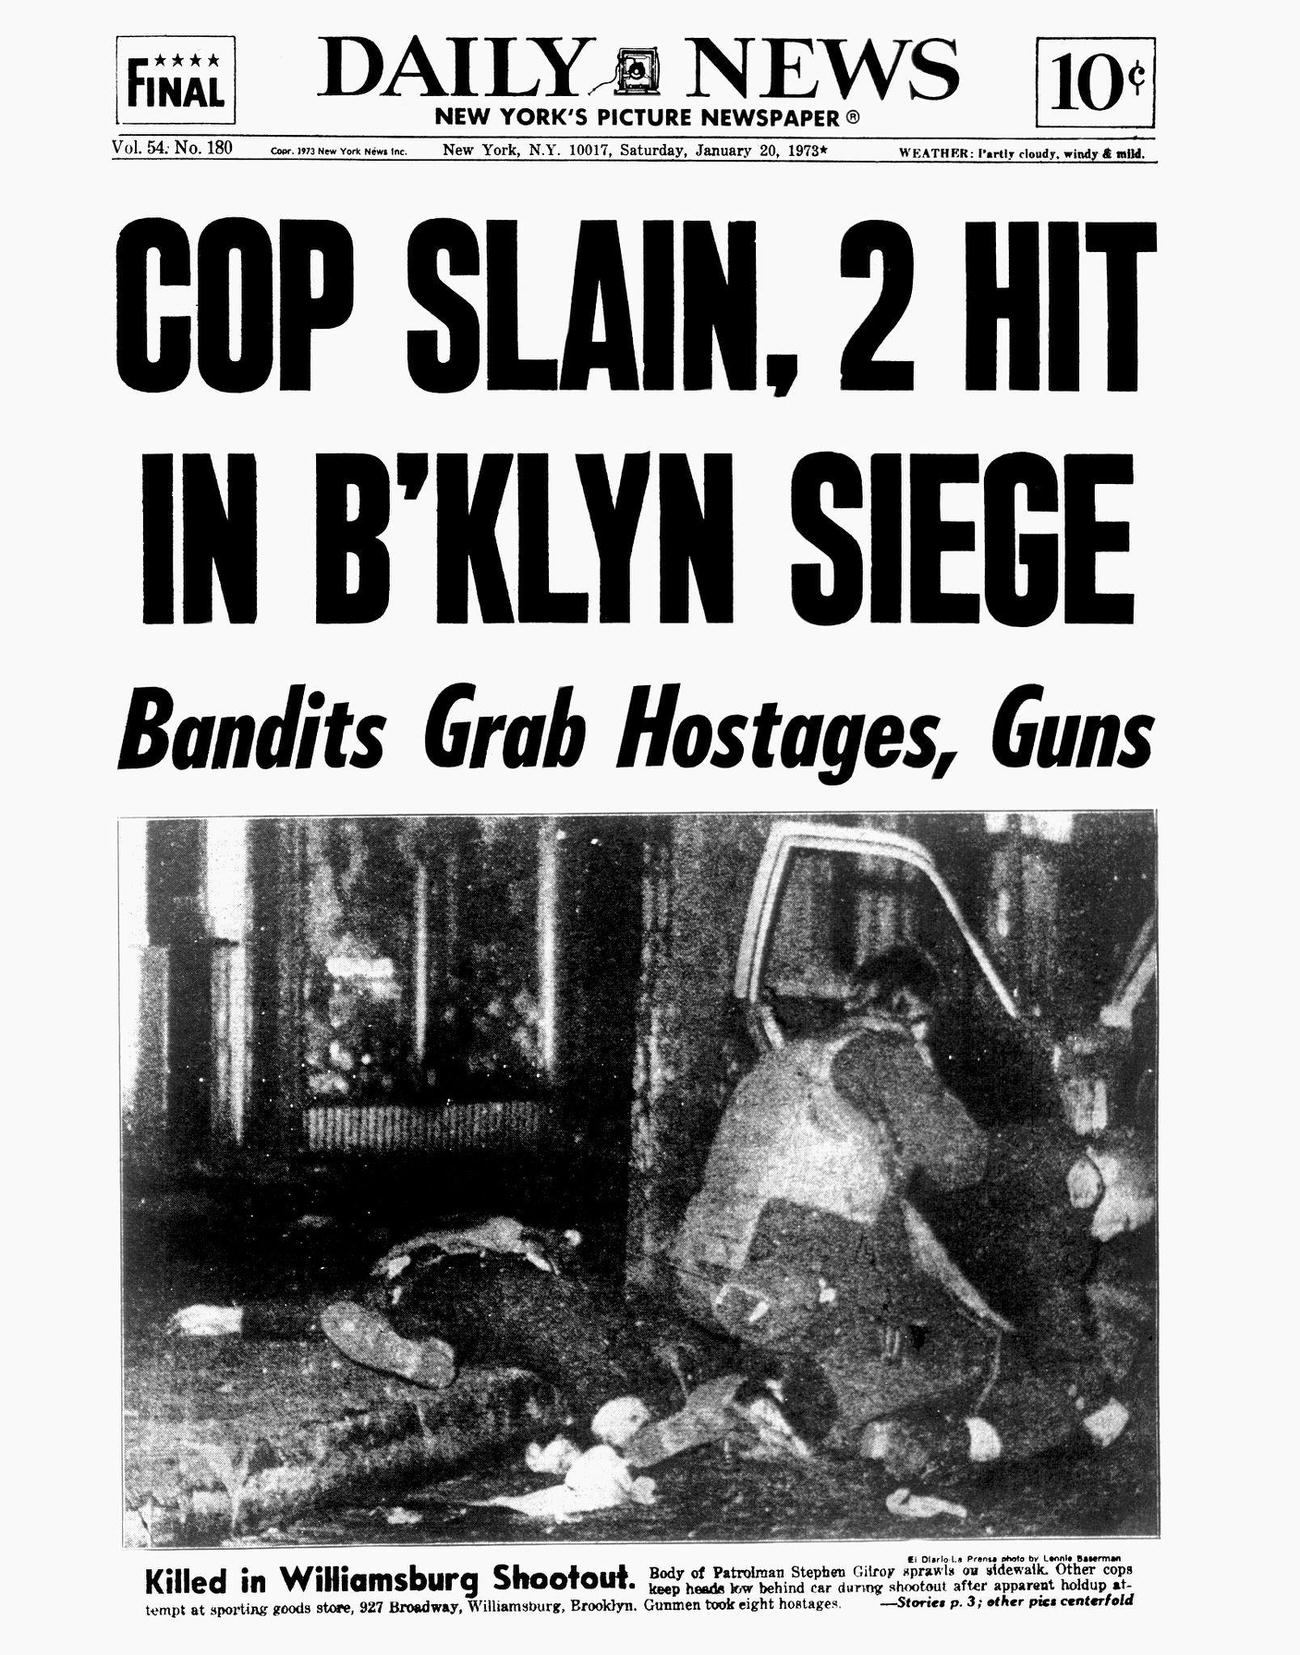 Daily News Headline Covers Brooklyn Hostage Siege, January 20, 1973